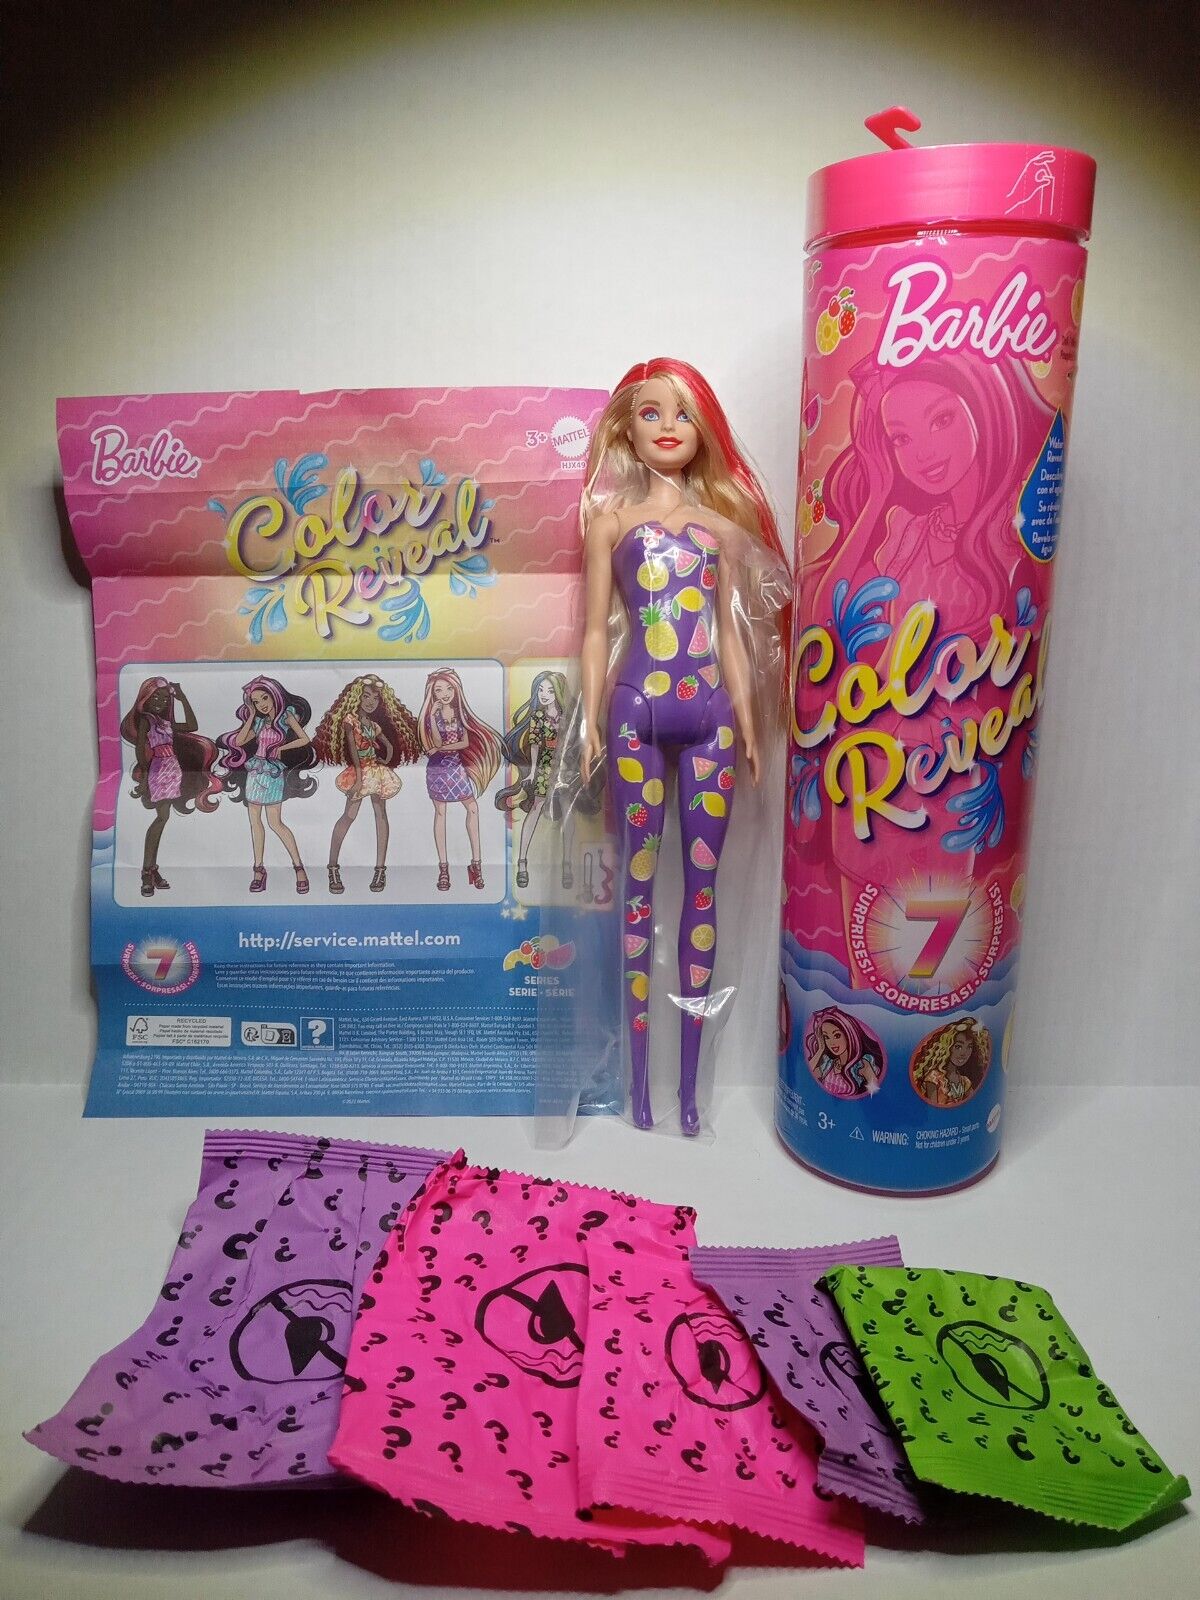 Barbie Color Reveal Doll Sweet Fruit Series Blonde Red Streaks Cherry  scented